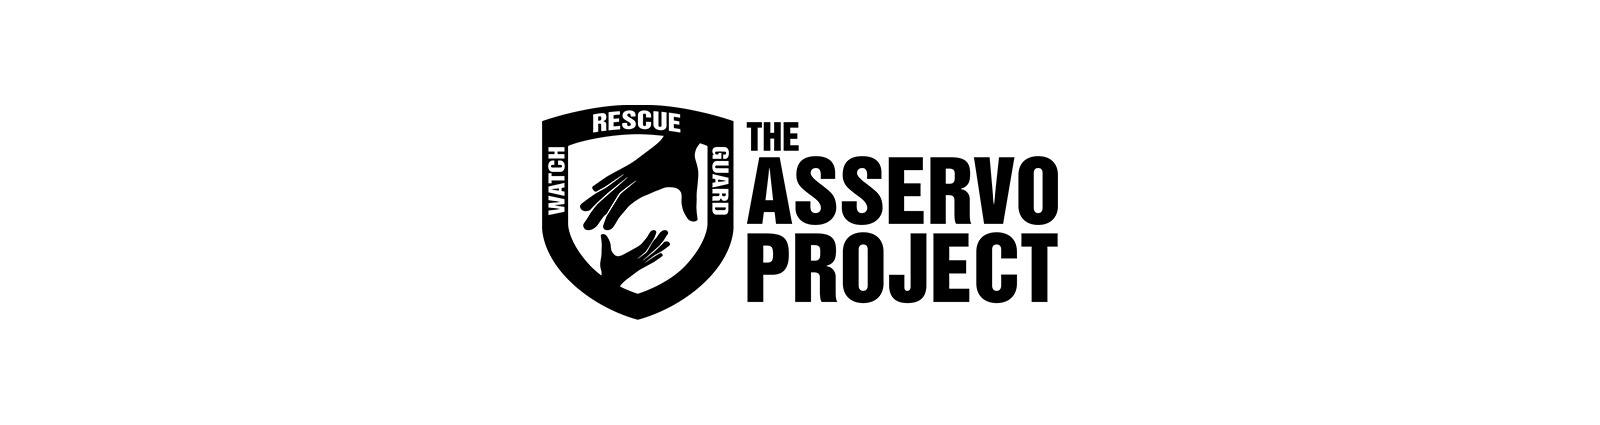 Asservo Project